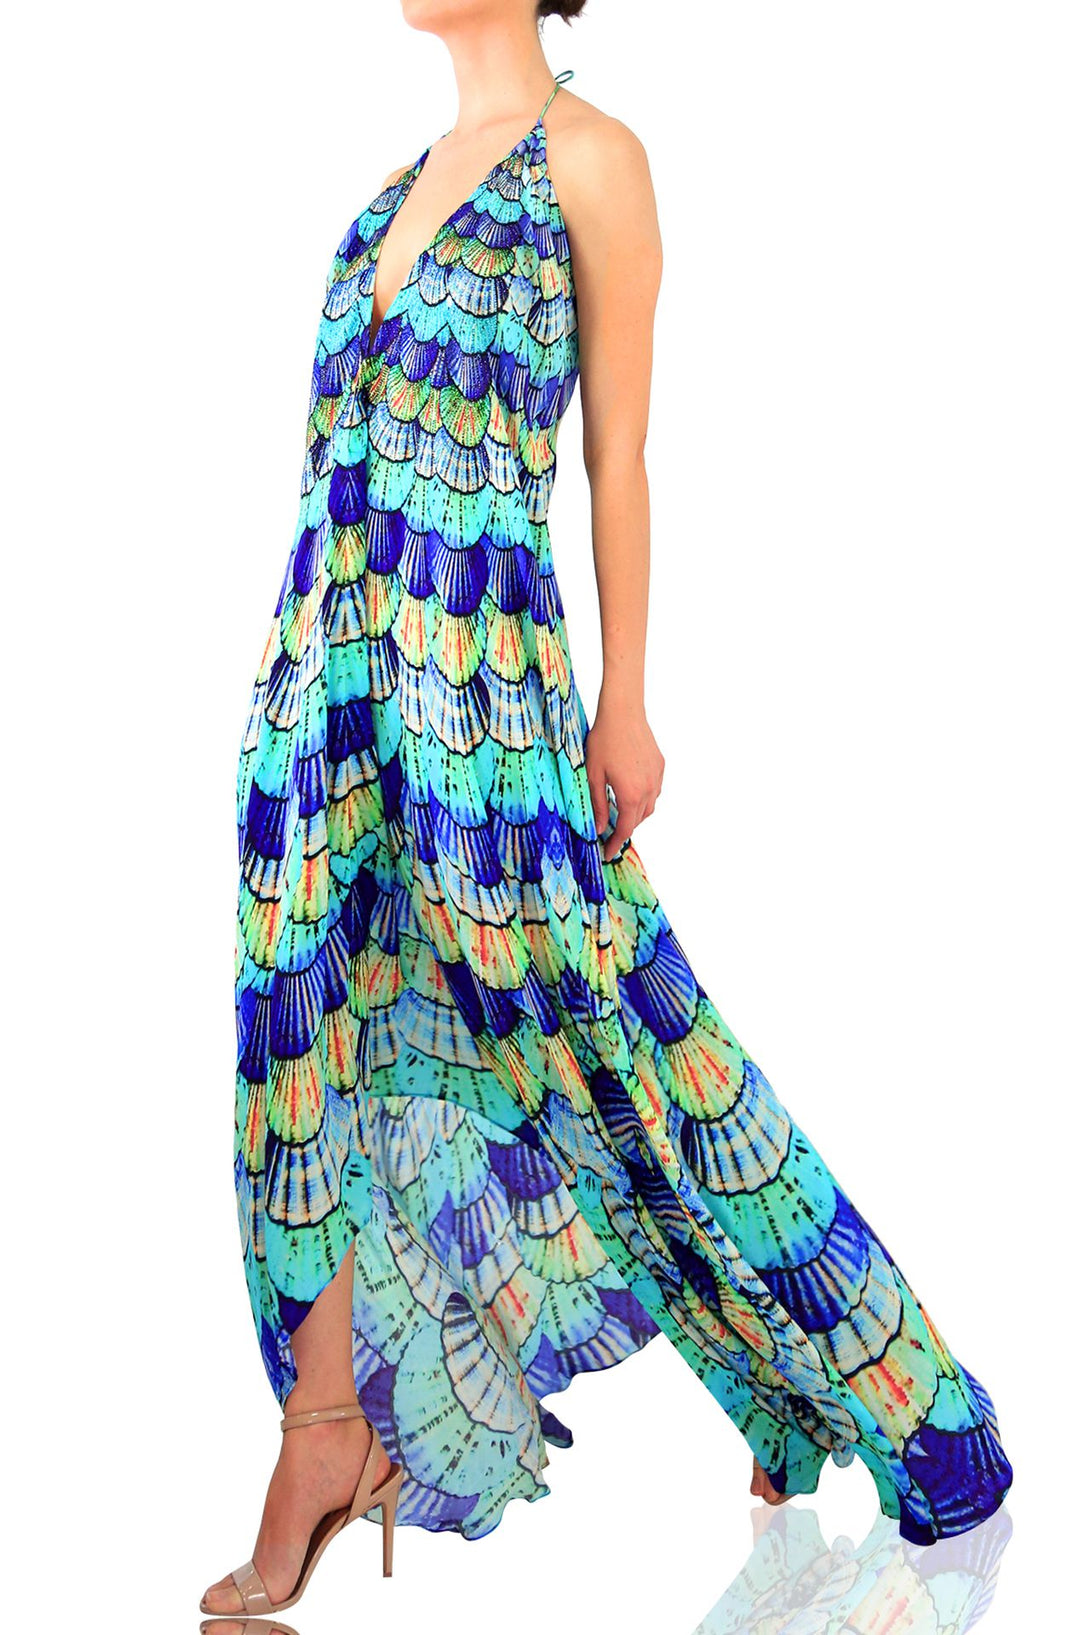 "Shahida Parides" "royal blue cocktail dress" "flowy maxi dress" "long dresses"